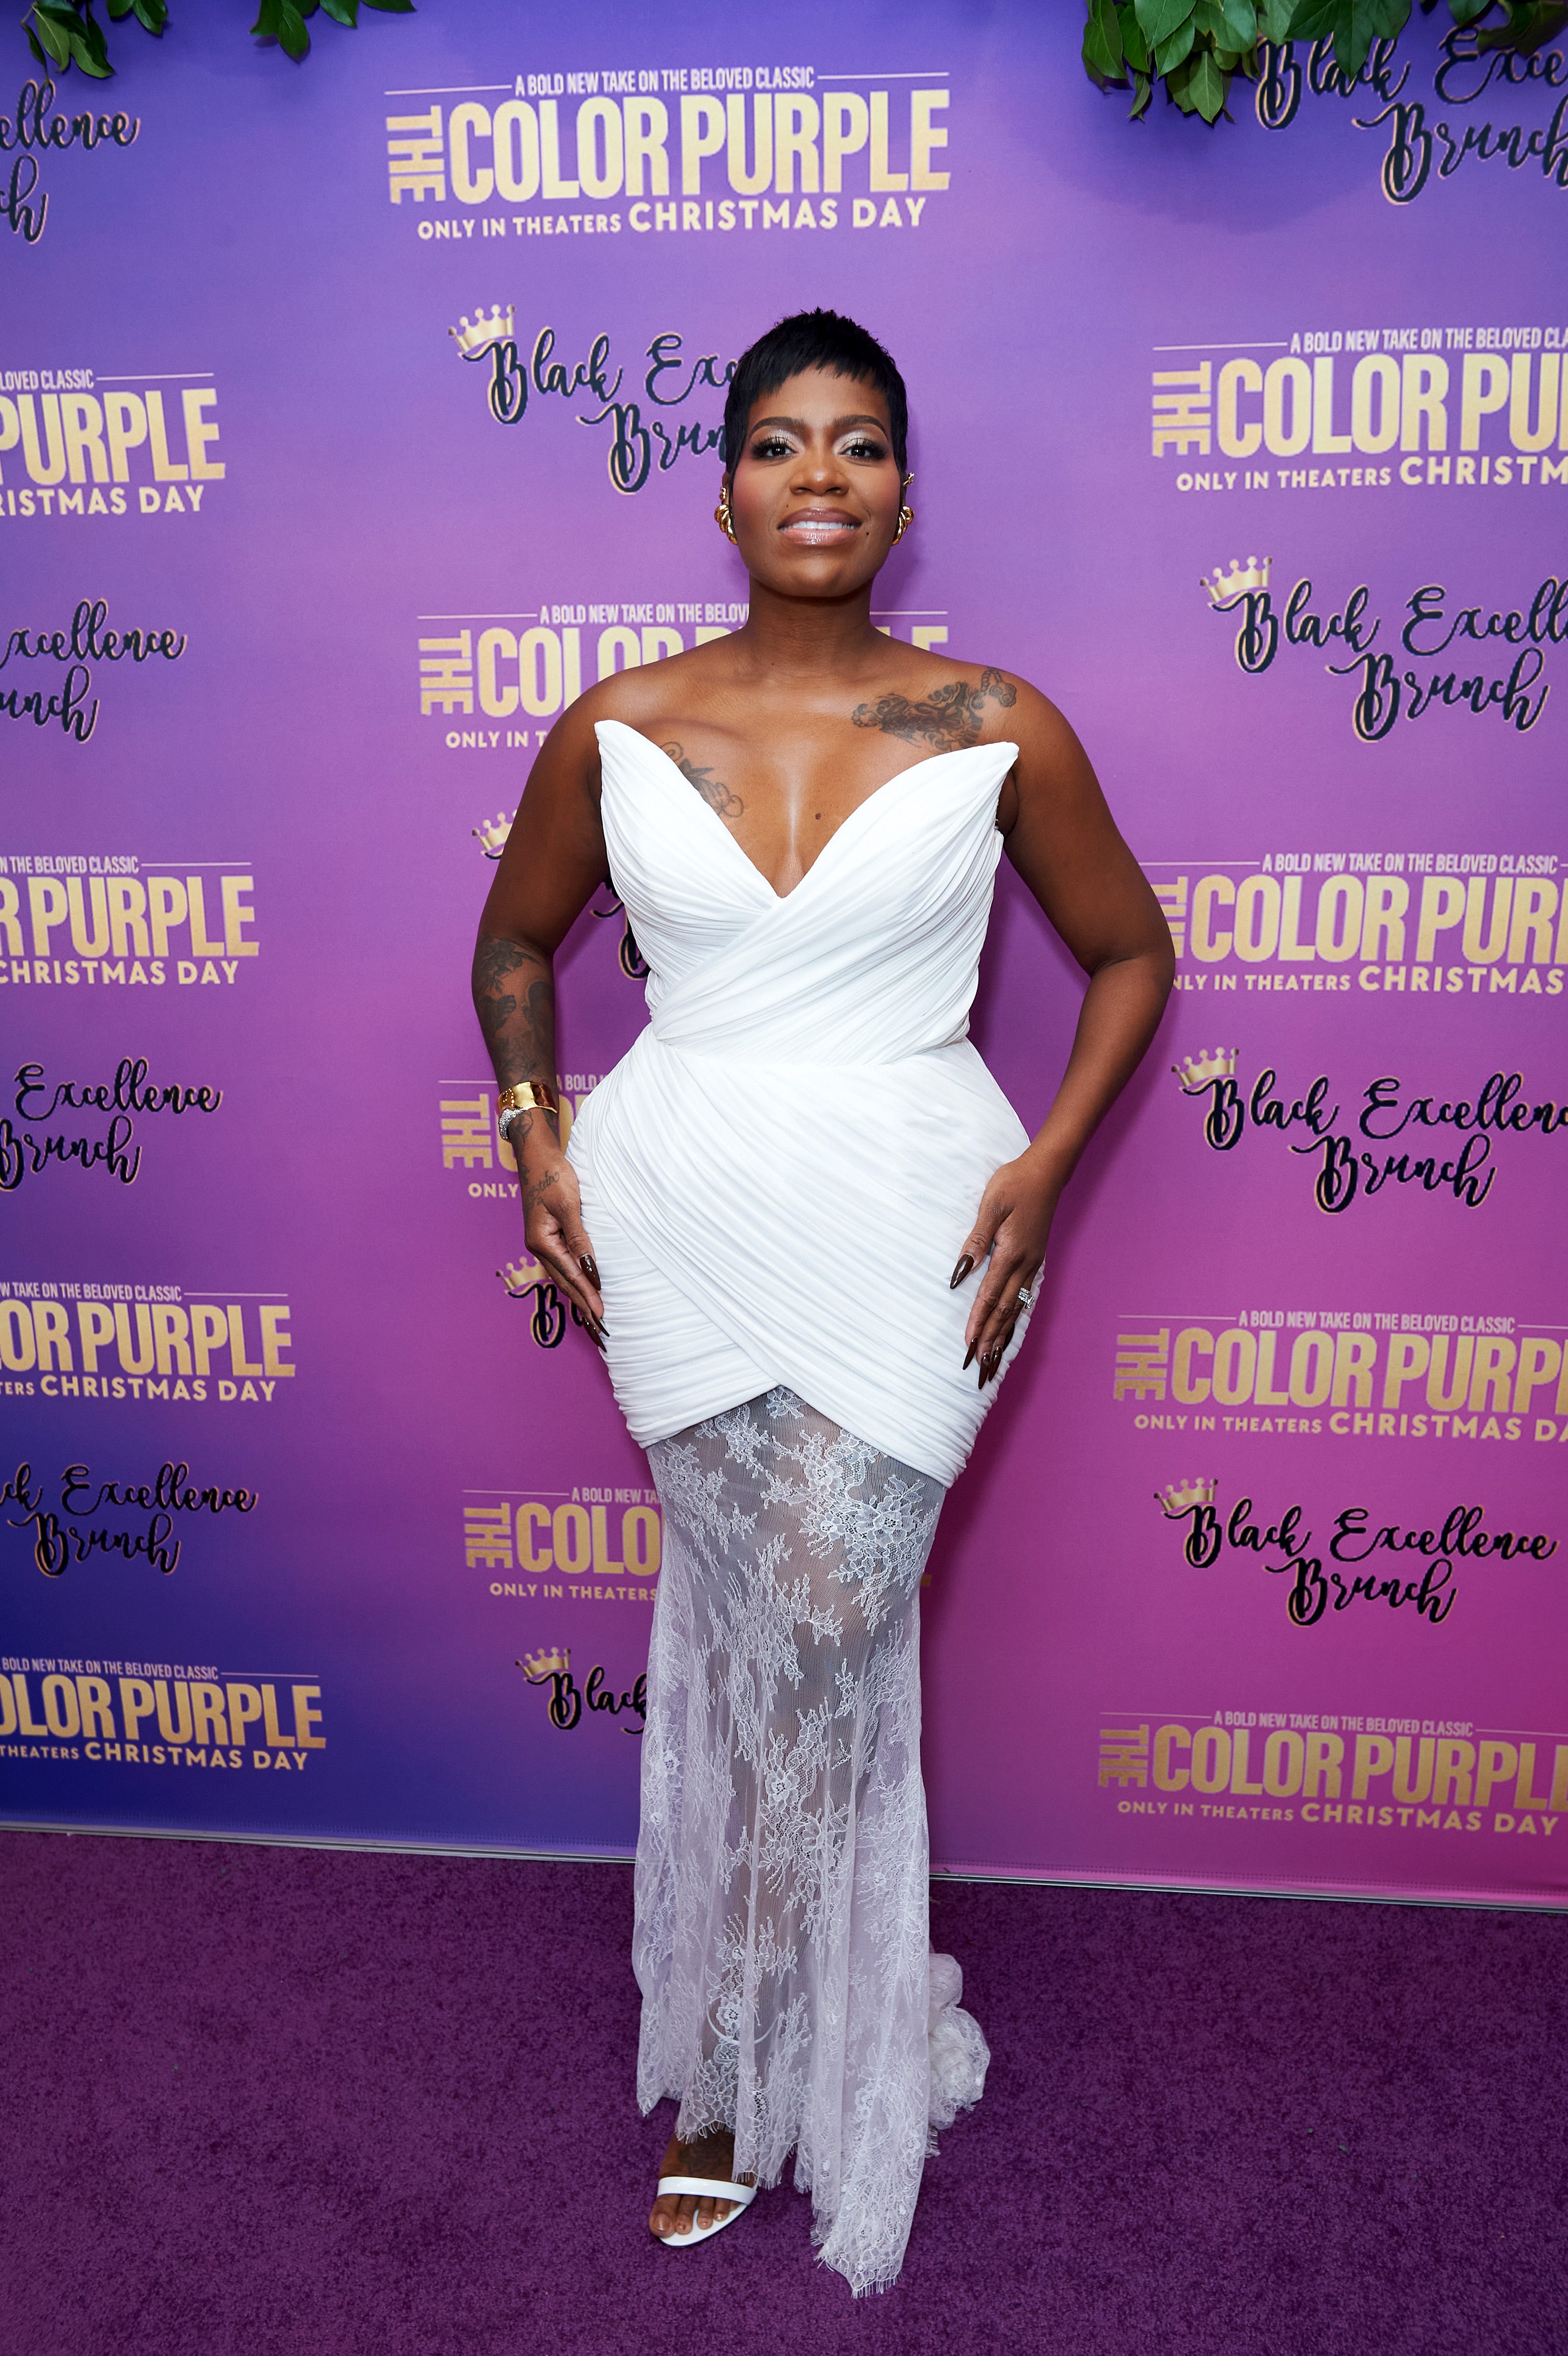 Fantasia nimmt am Black Excellence Brunch zur Feier von „The Color Purple“ im Dezember 2023 teil.